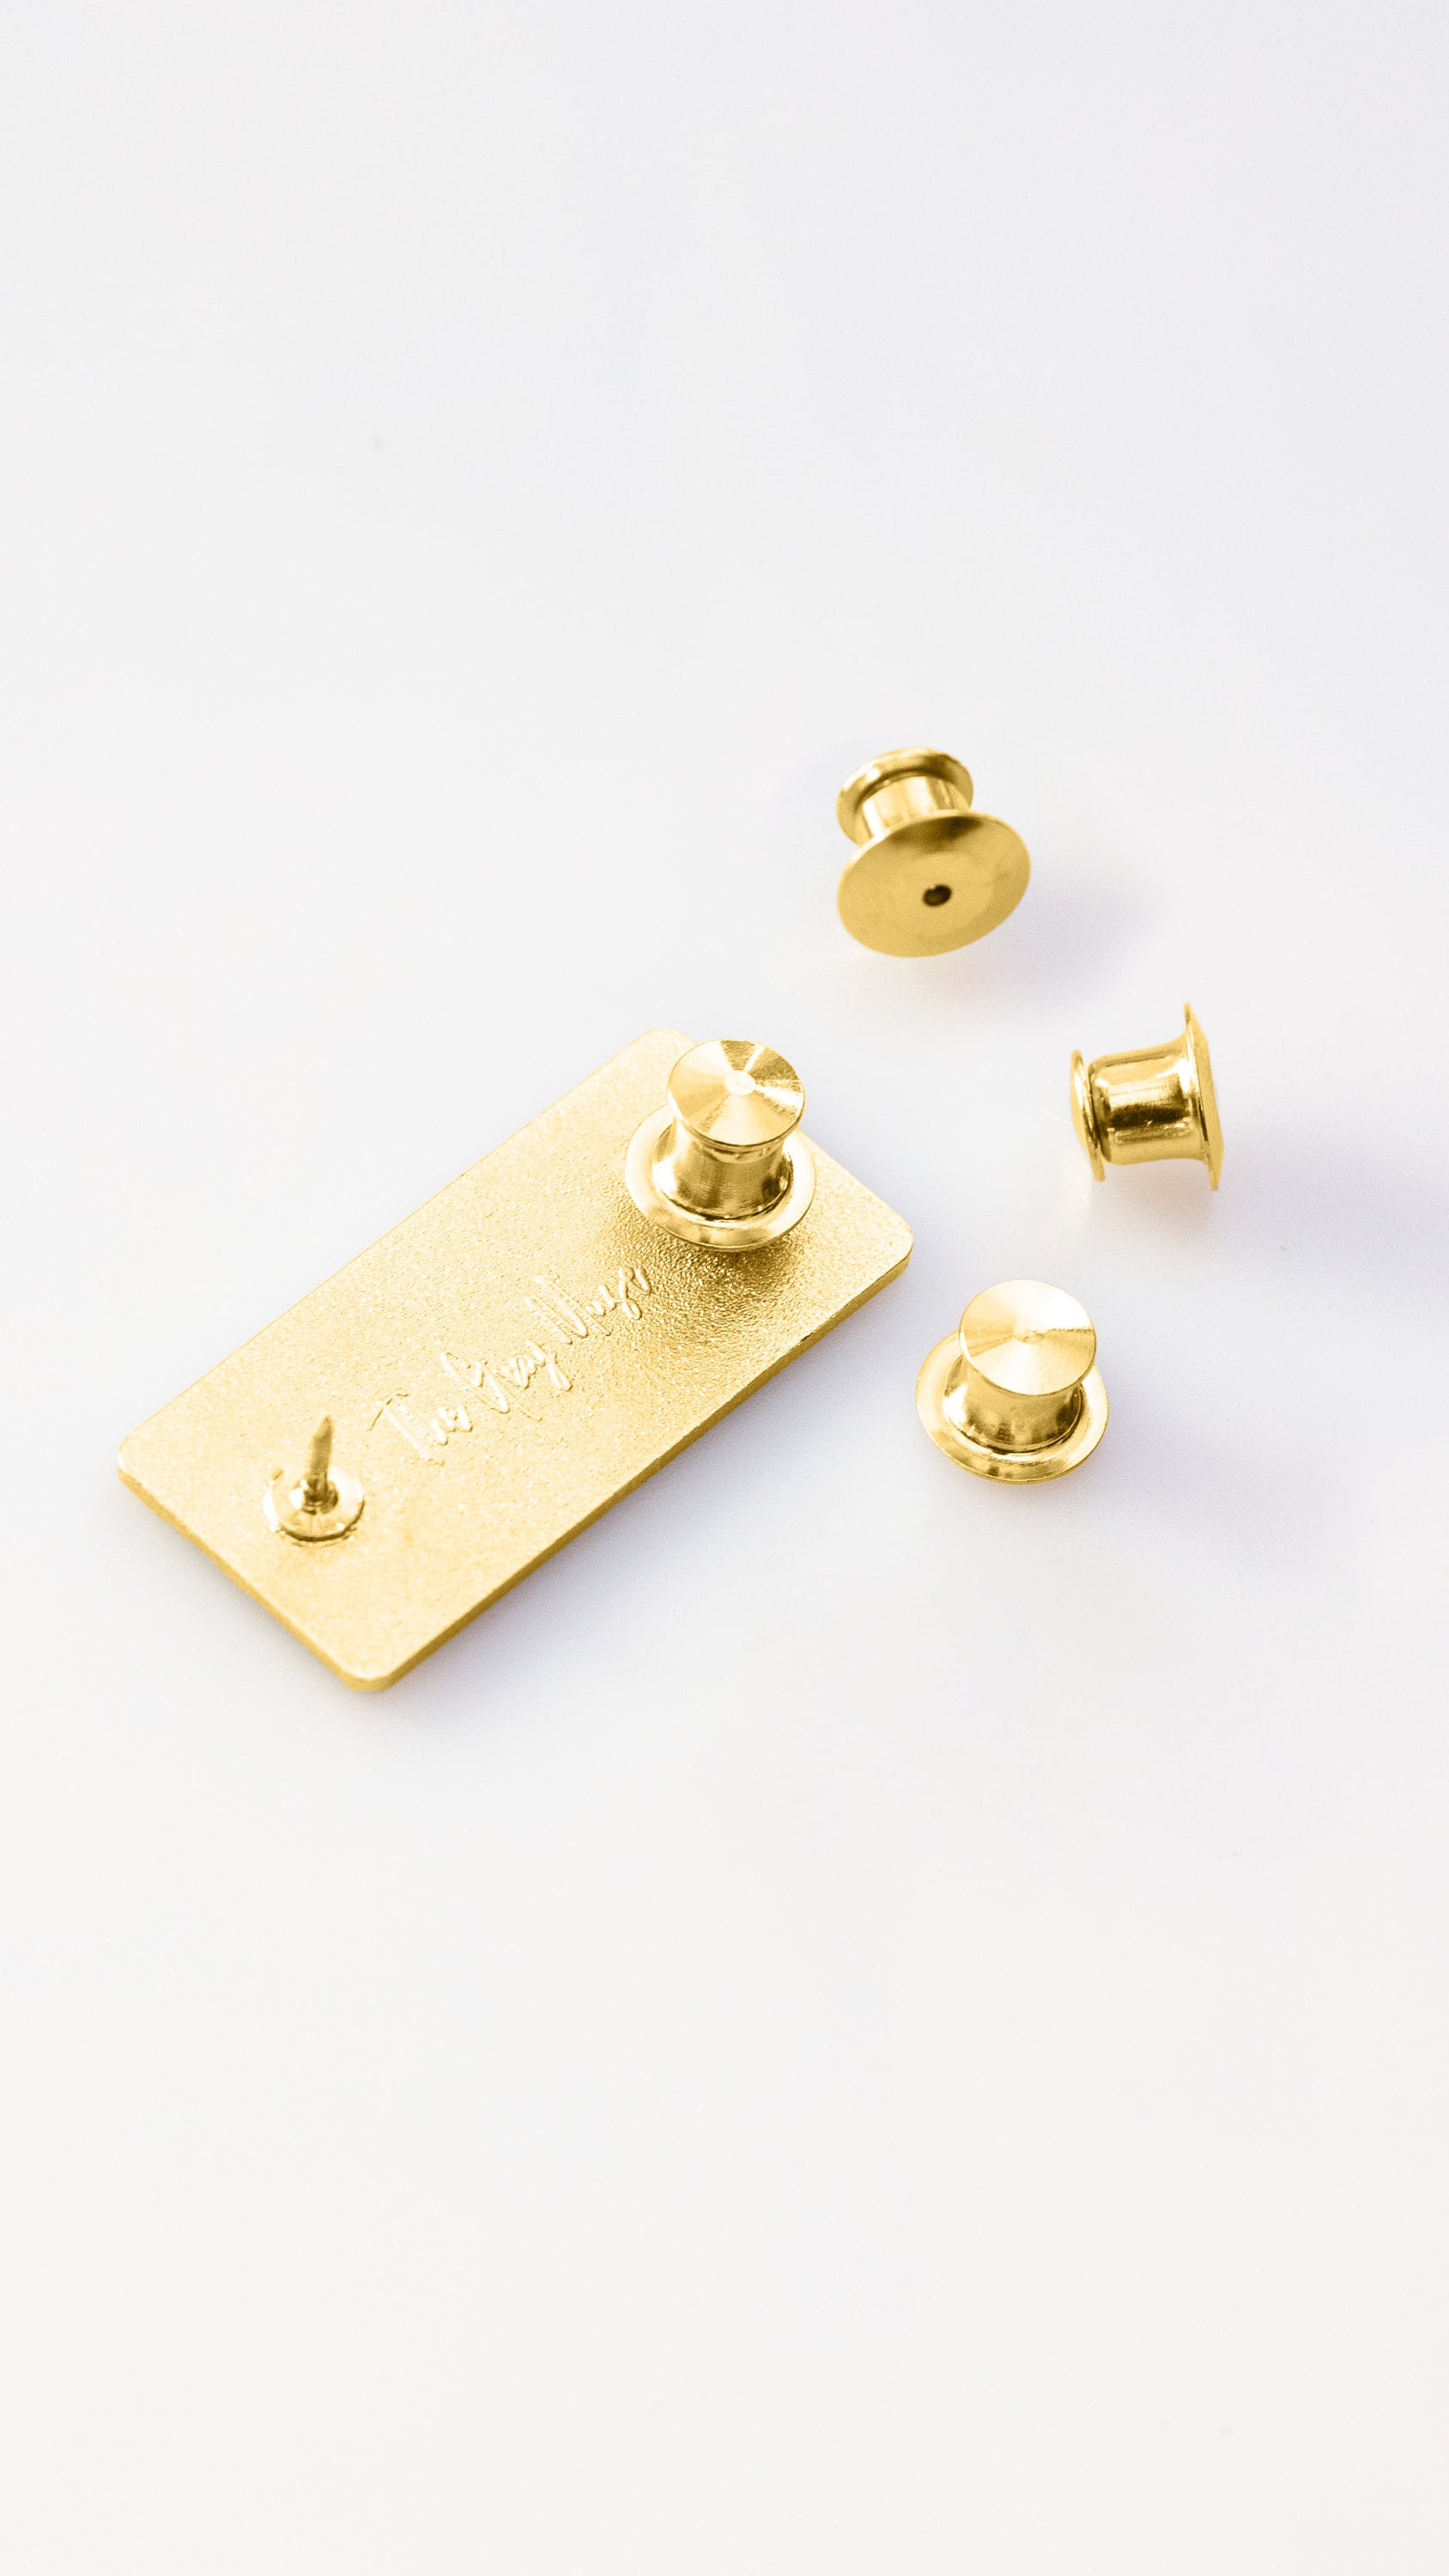 10 New Pin Keepers/Pin Badge Locks/Locking Pin Backs for Enamel Lapel Hat  Pins